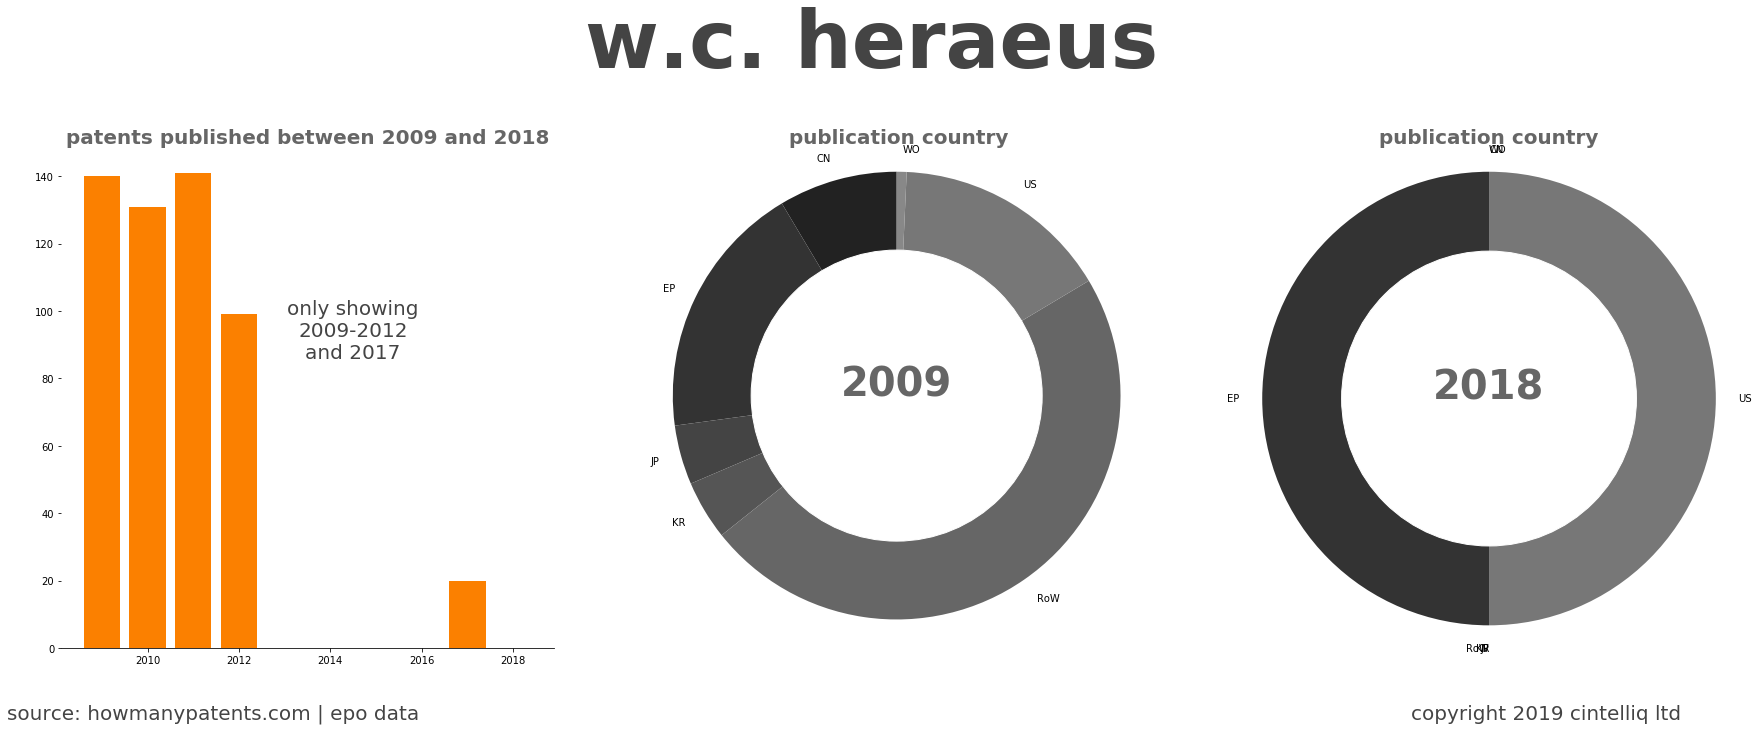 summary of patents for W.C. Heraeus